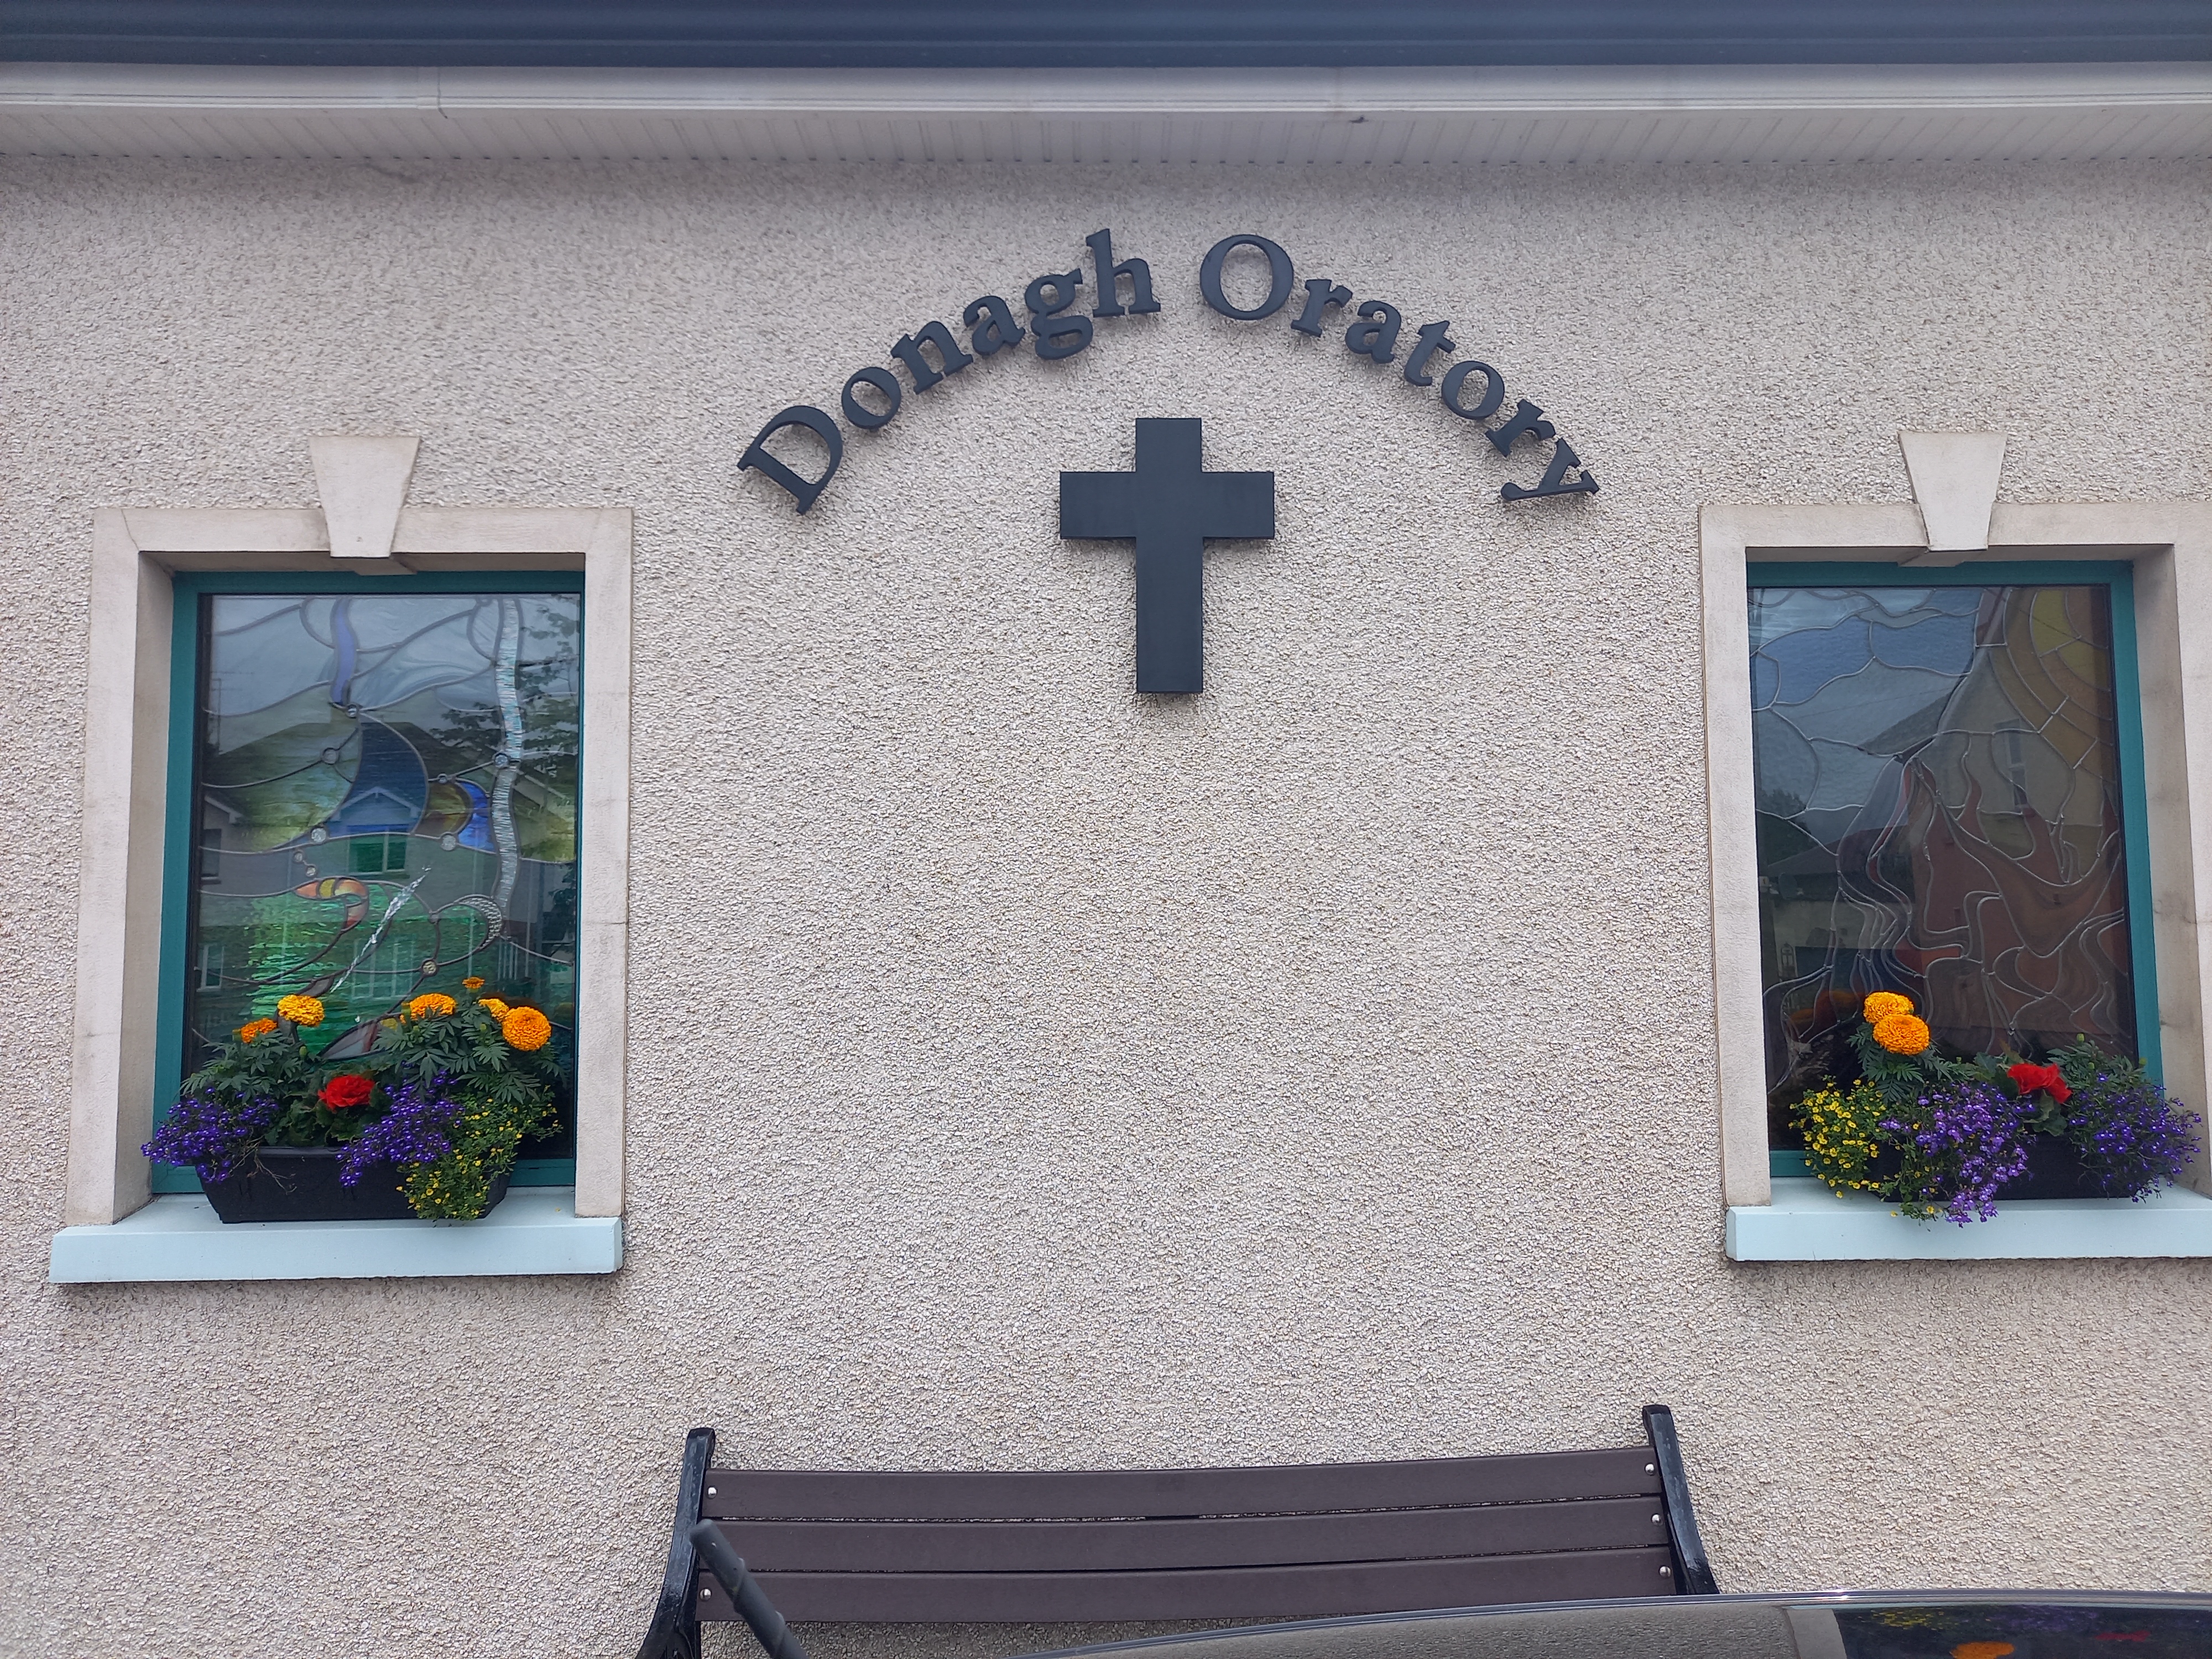 Donagh Oratory